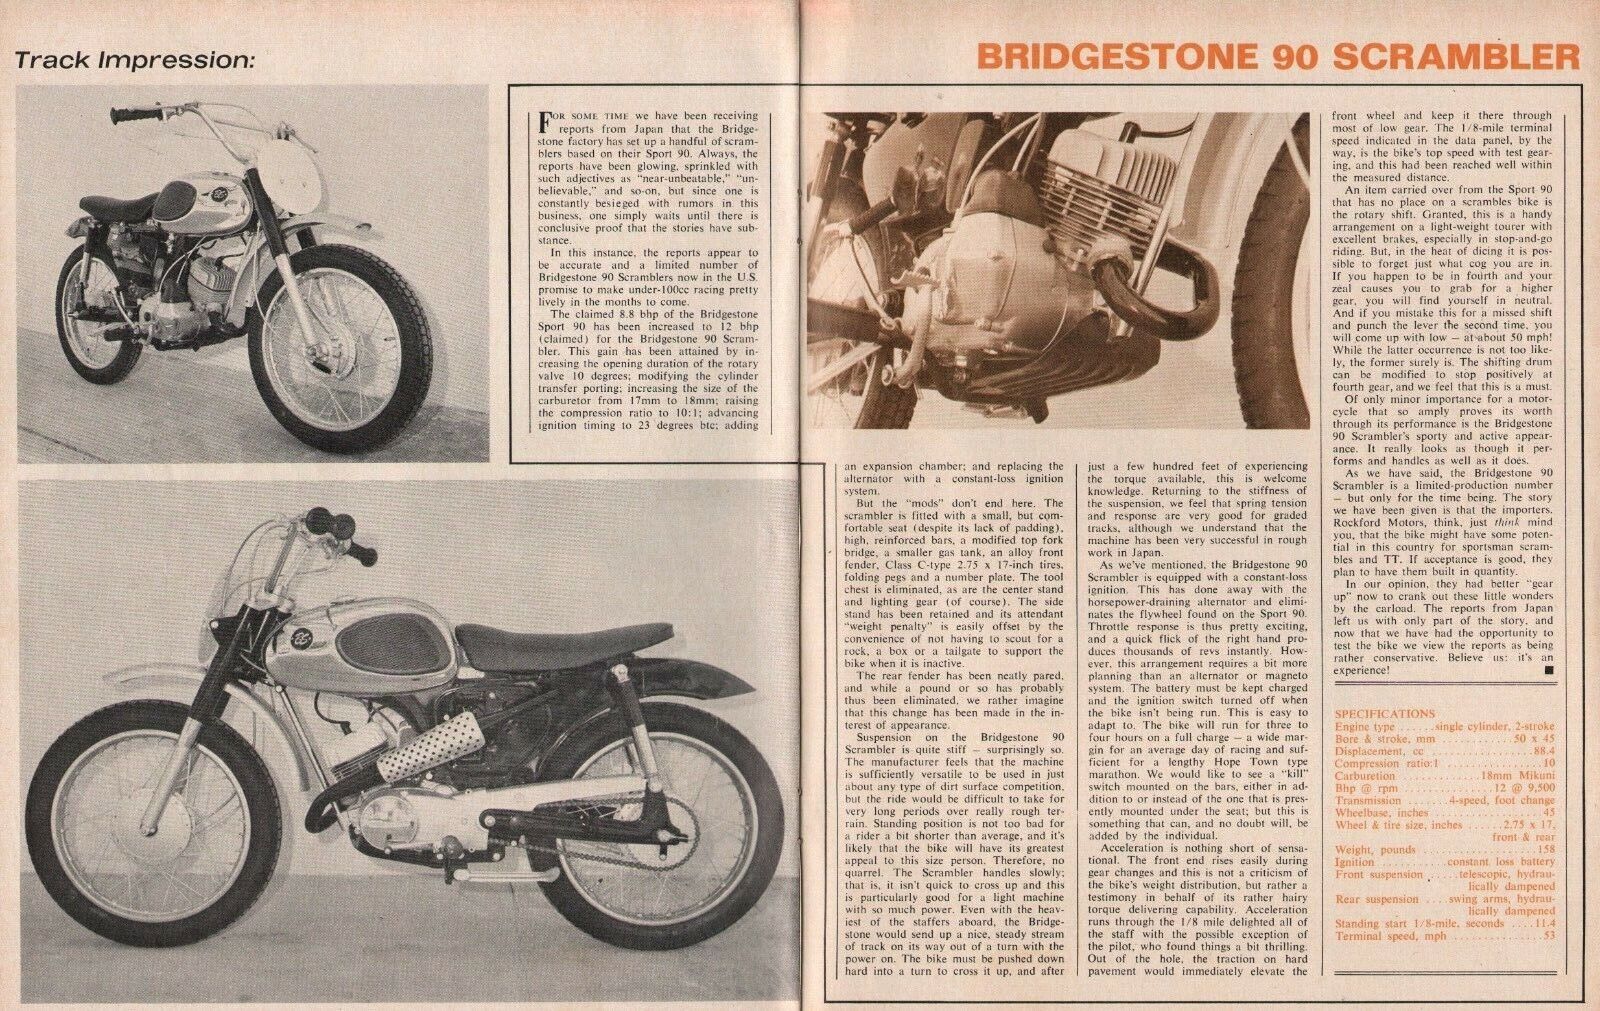 1966 Bridgestone 90 Scrambler - 2-Page Vintage Motorcycle Article